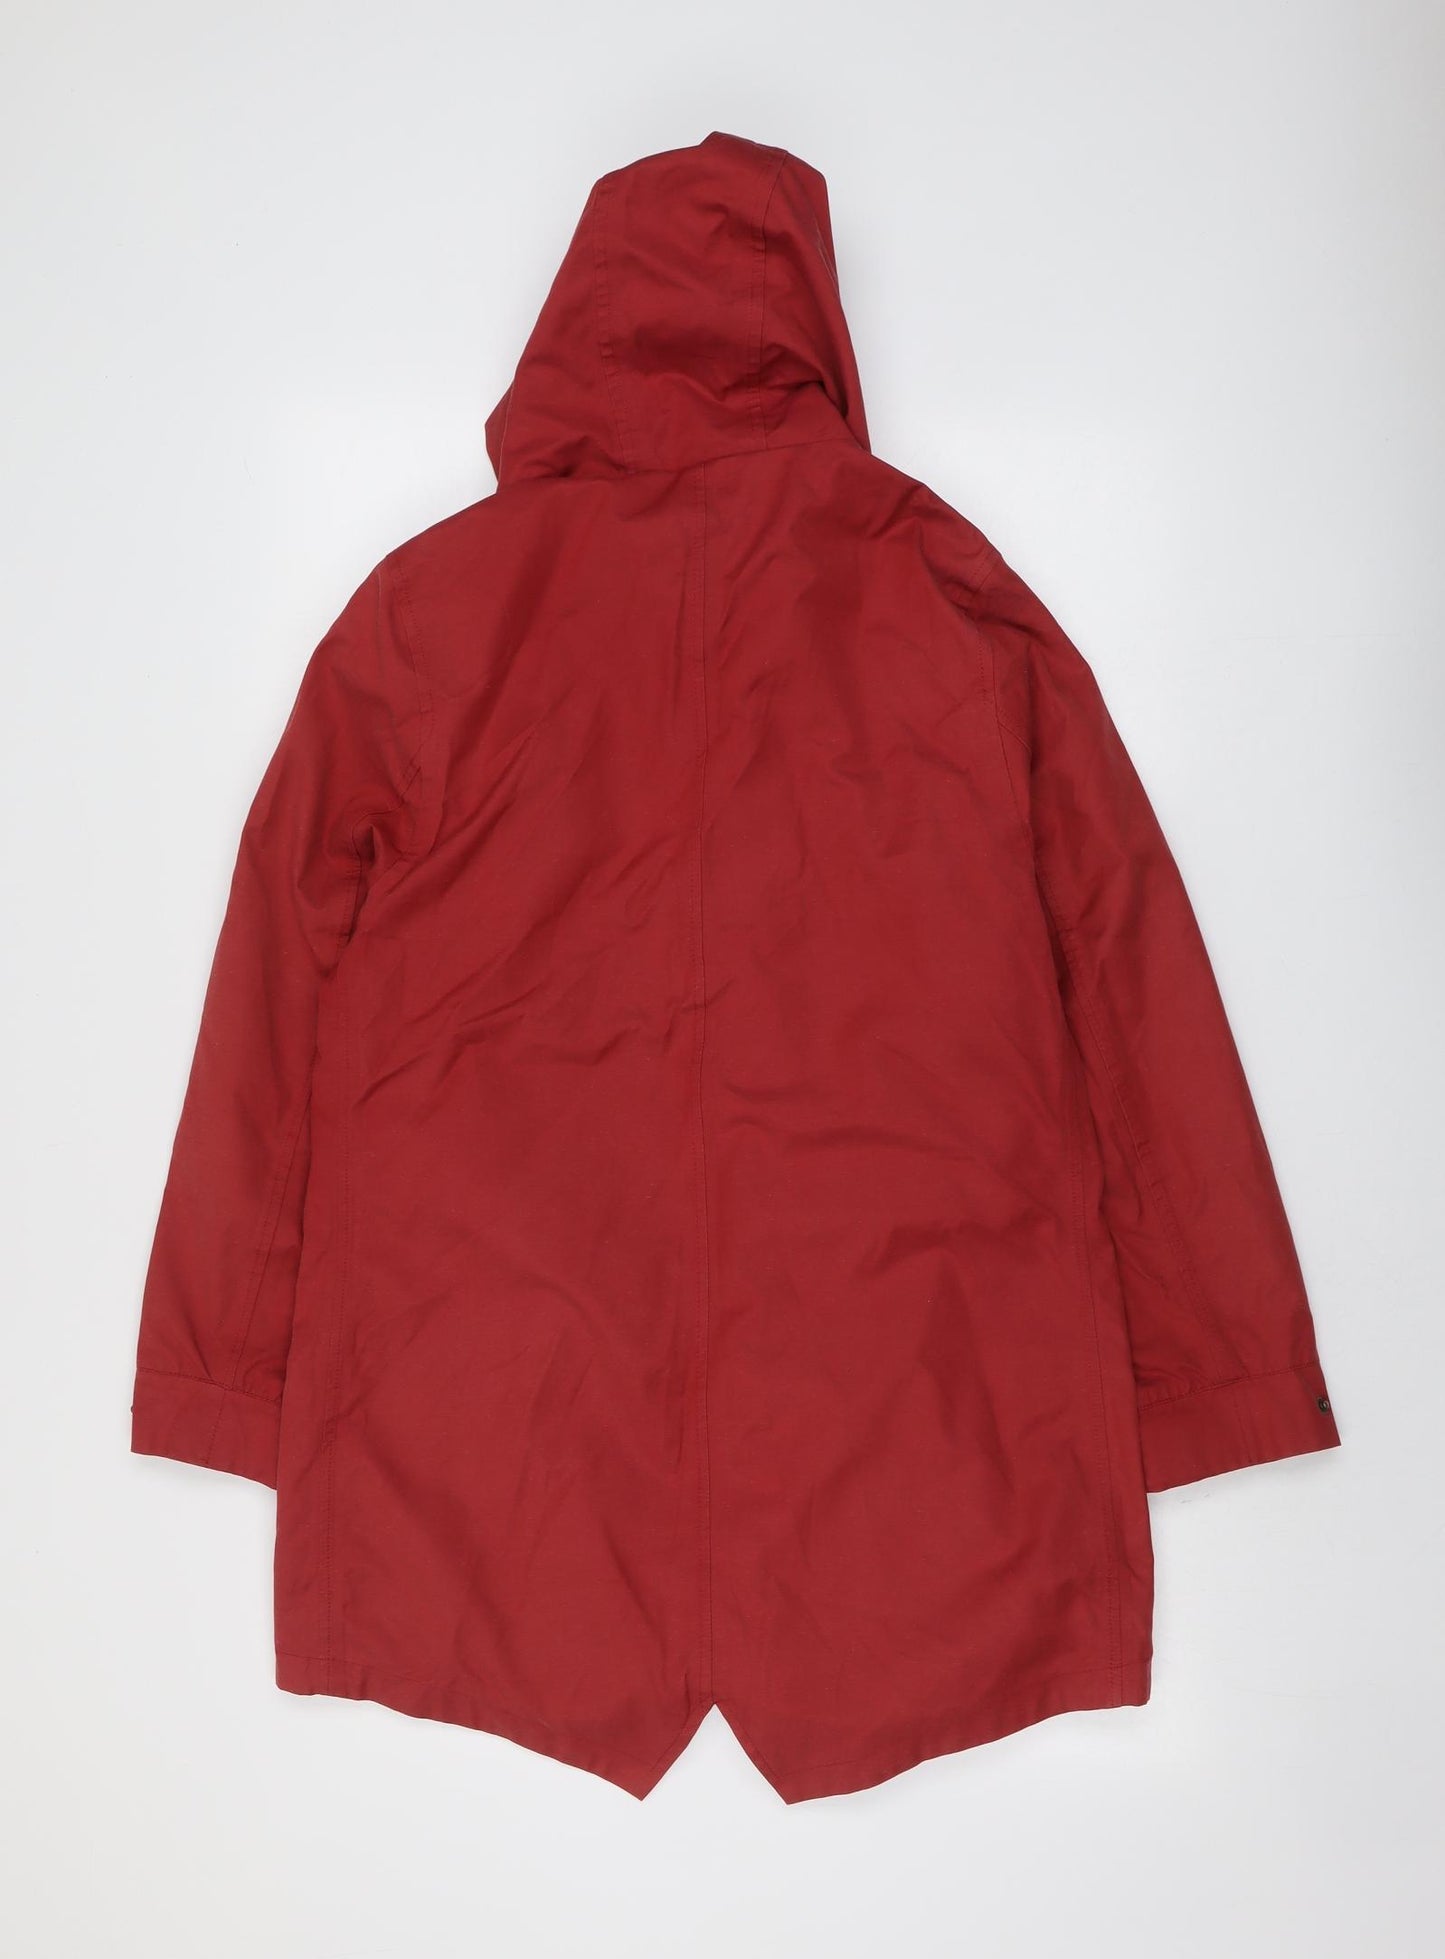 TIGI Womens Red Jacket Size 10 Zip